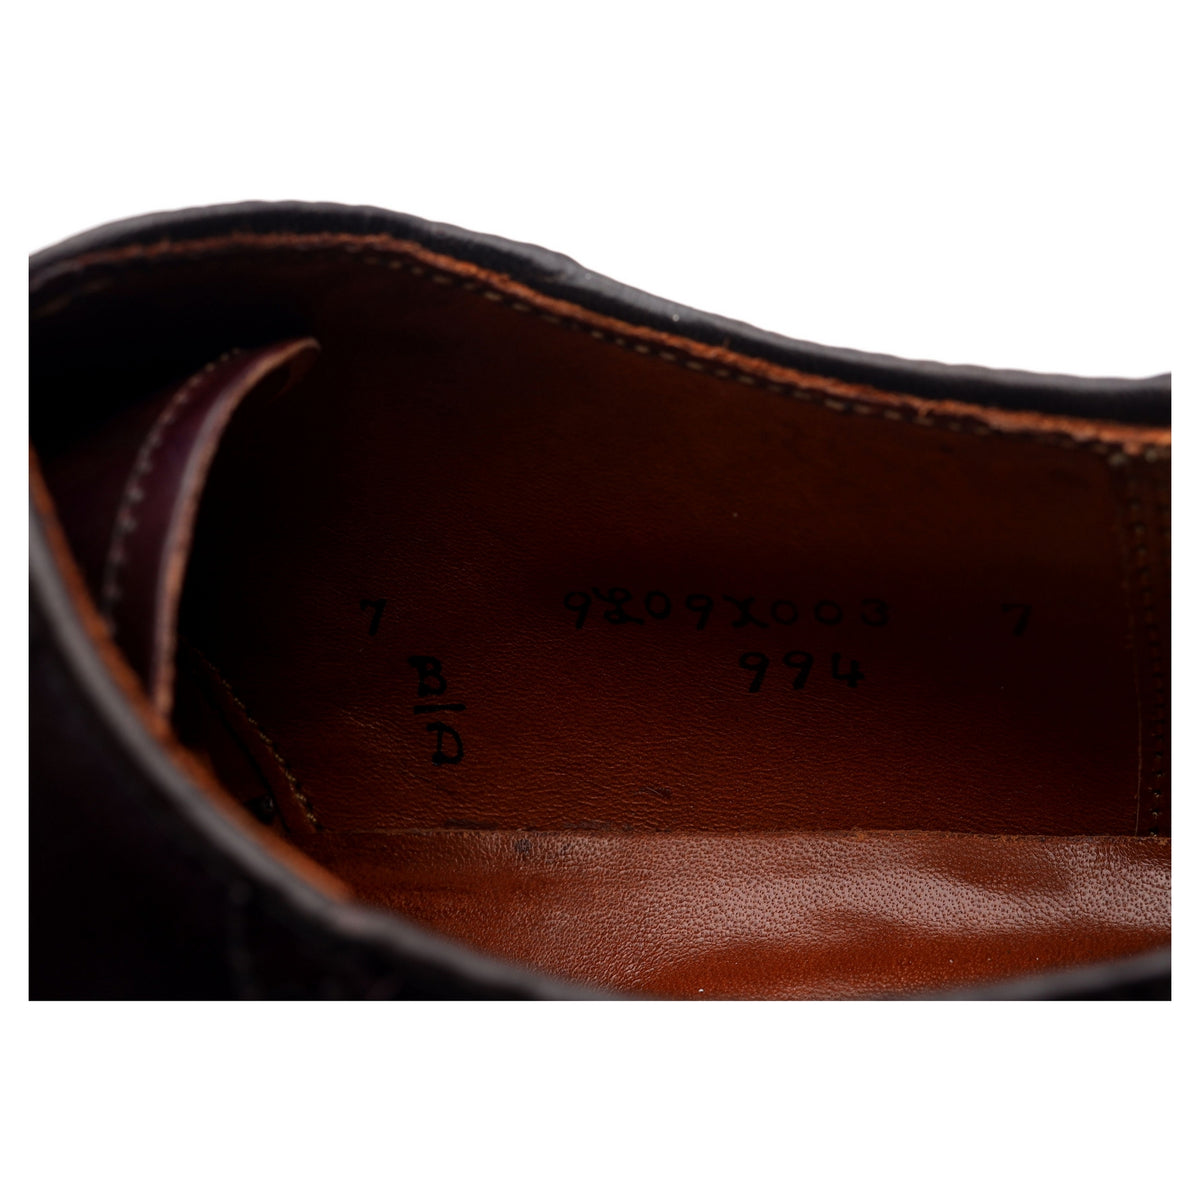 &#39;994&#39; Burgundy Cordovan Leather Saddle Oxford UK 6.5 US 7